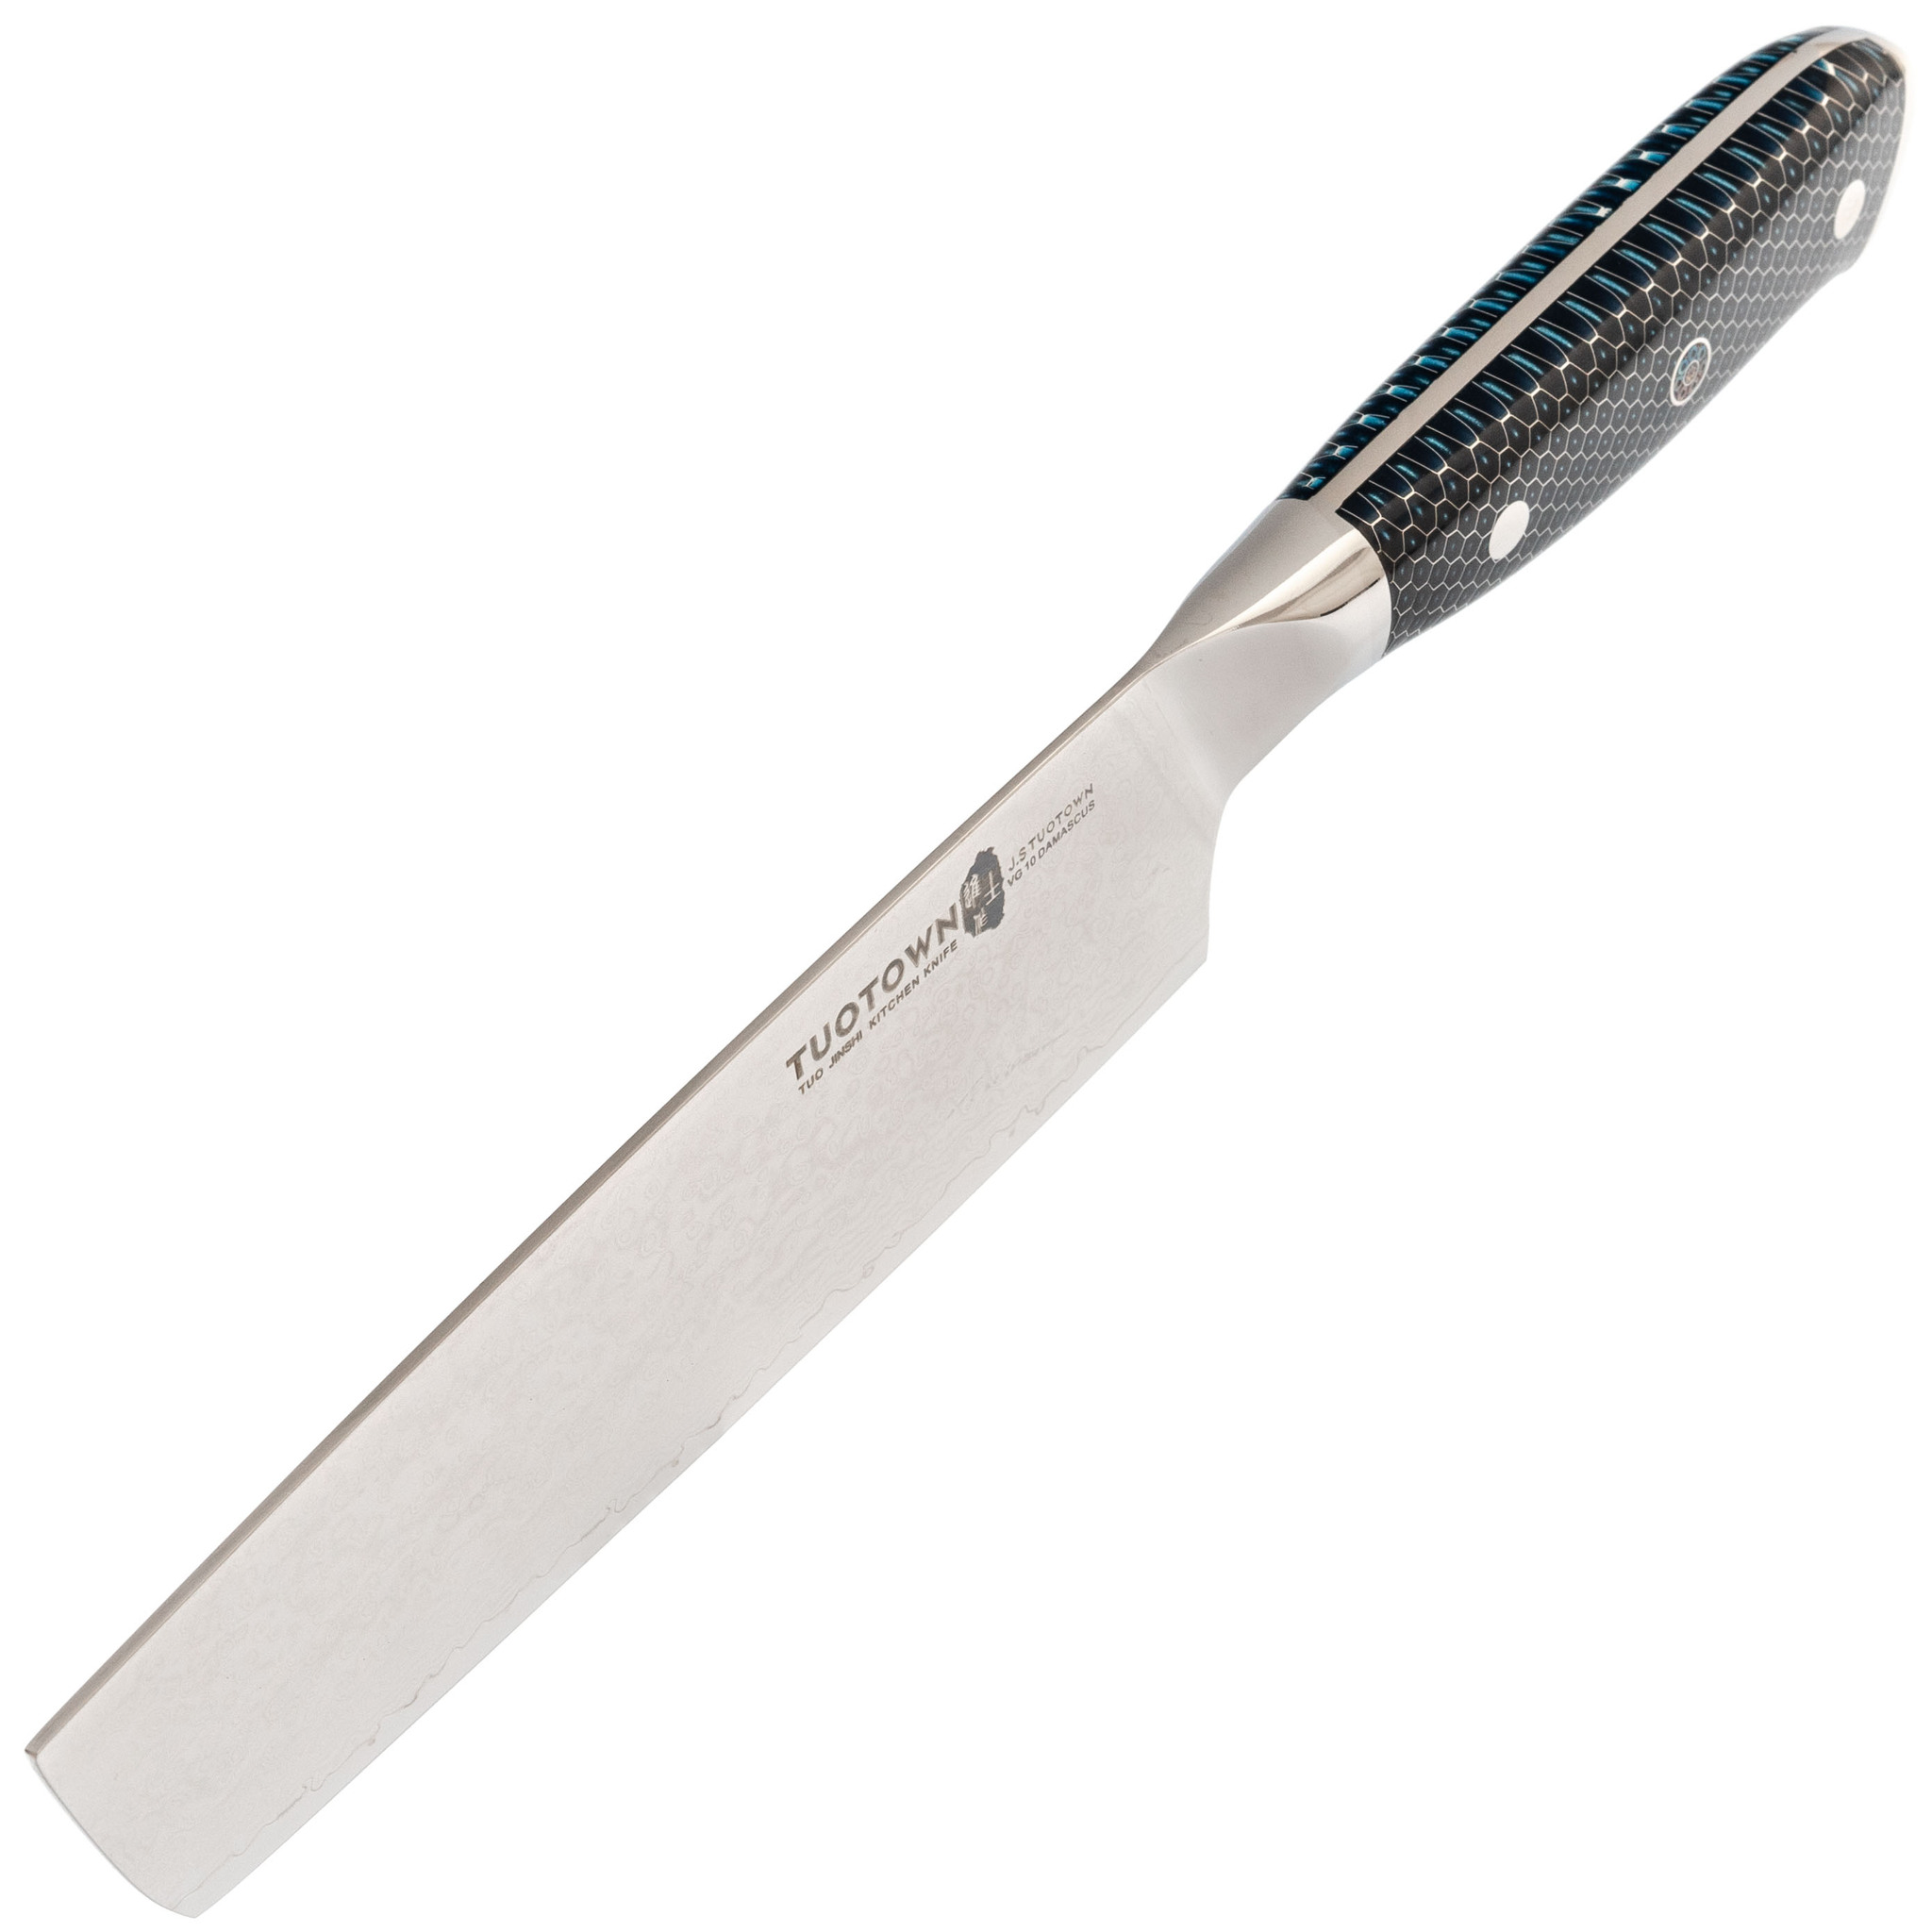 Кухонный нож Накири Tuotown, сталь VG10, обкладка Damascus, рукоять акрил, синий - фото 2